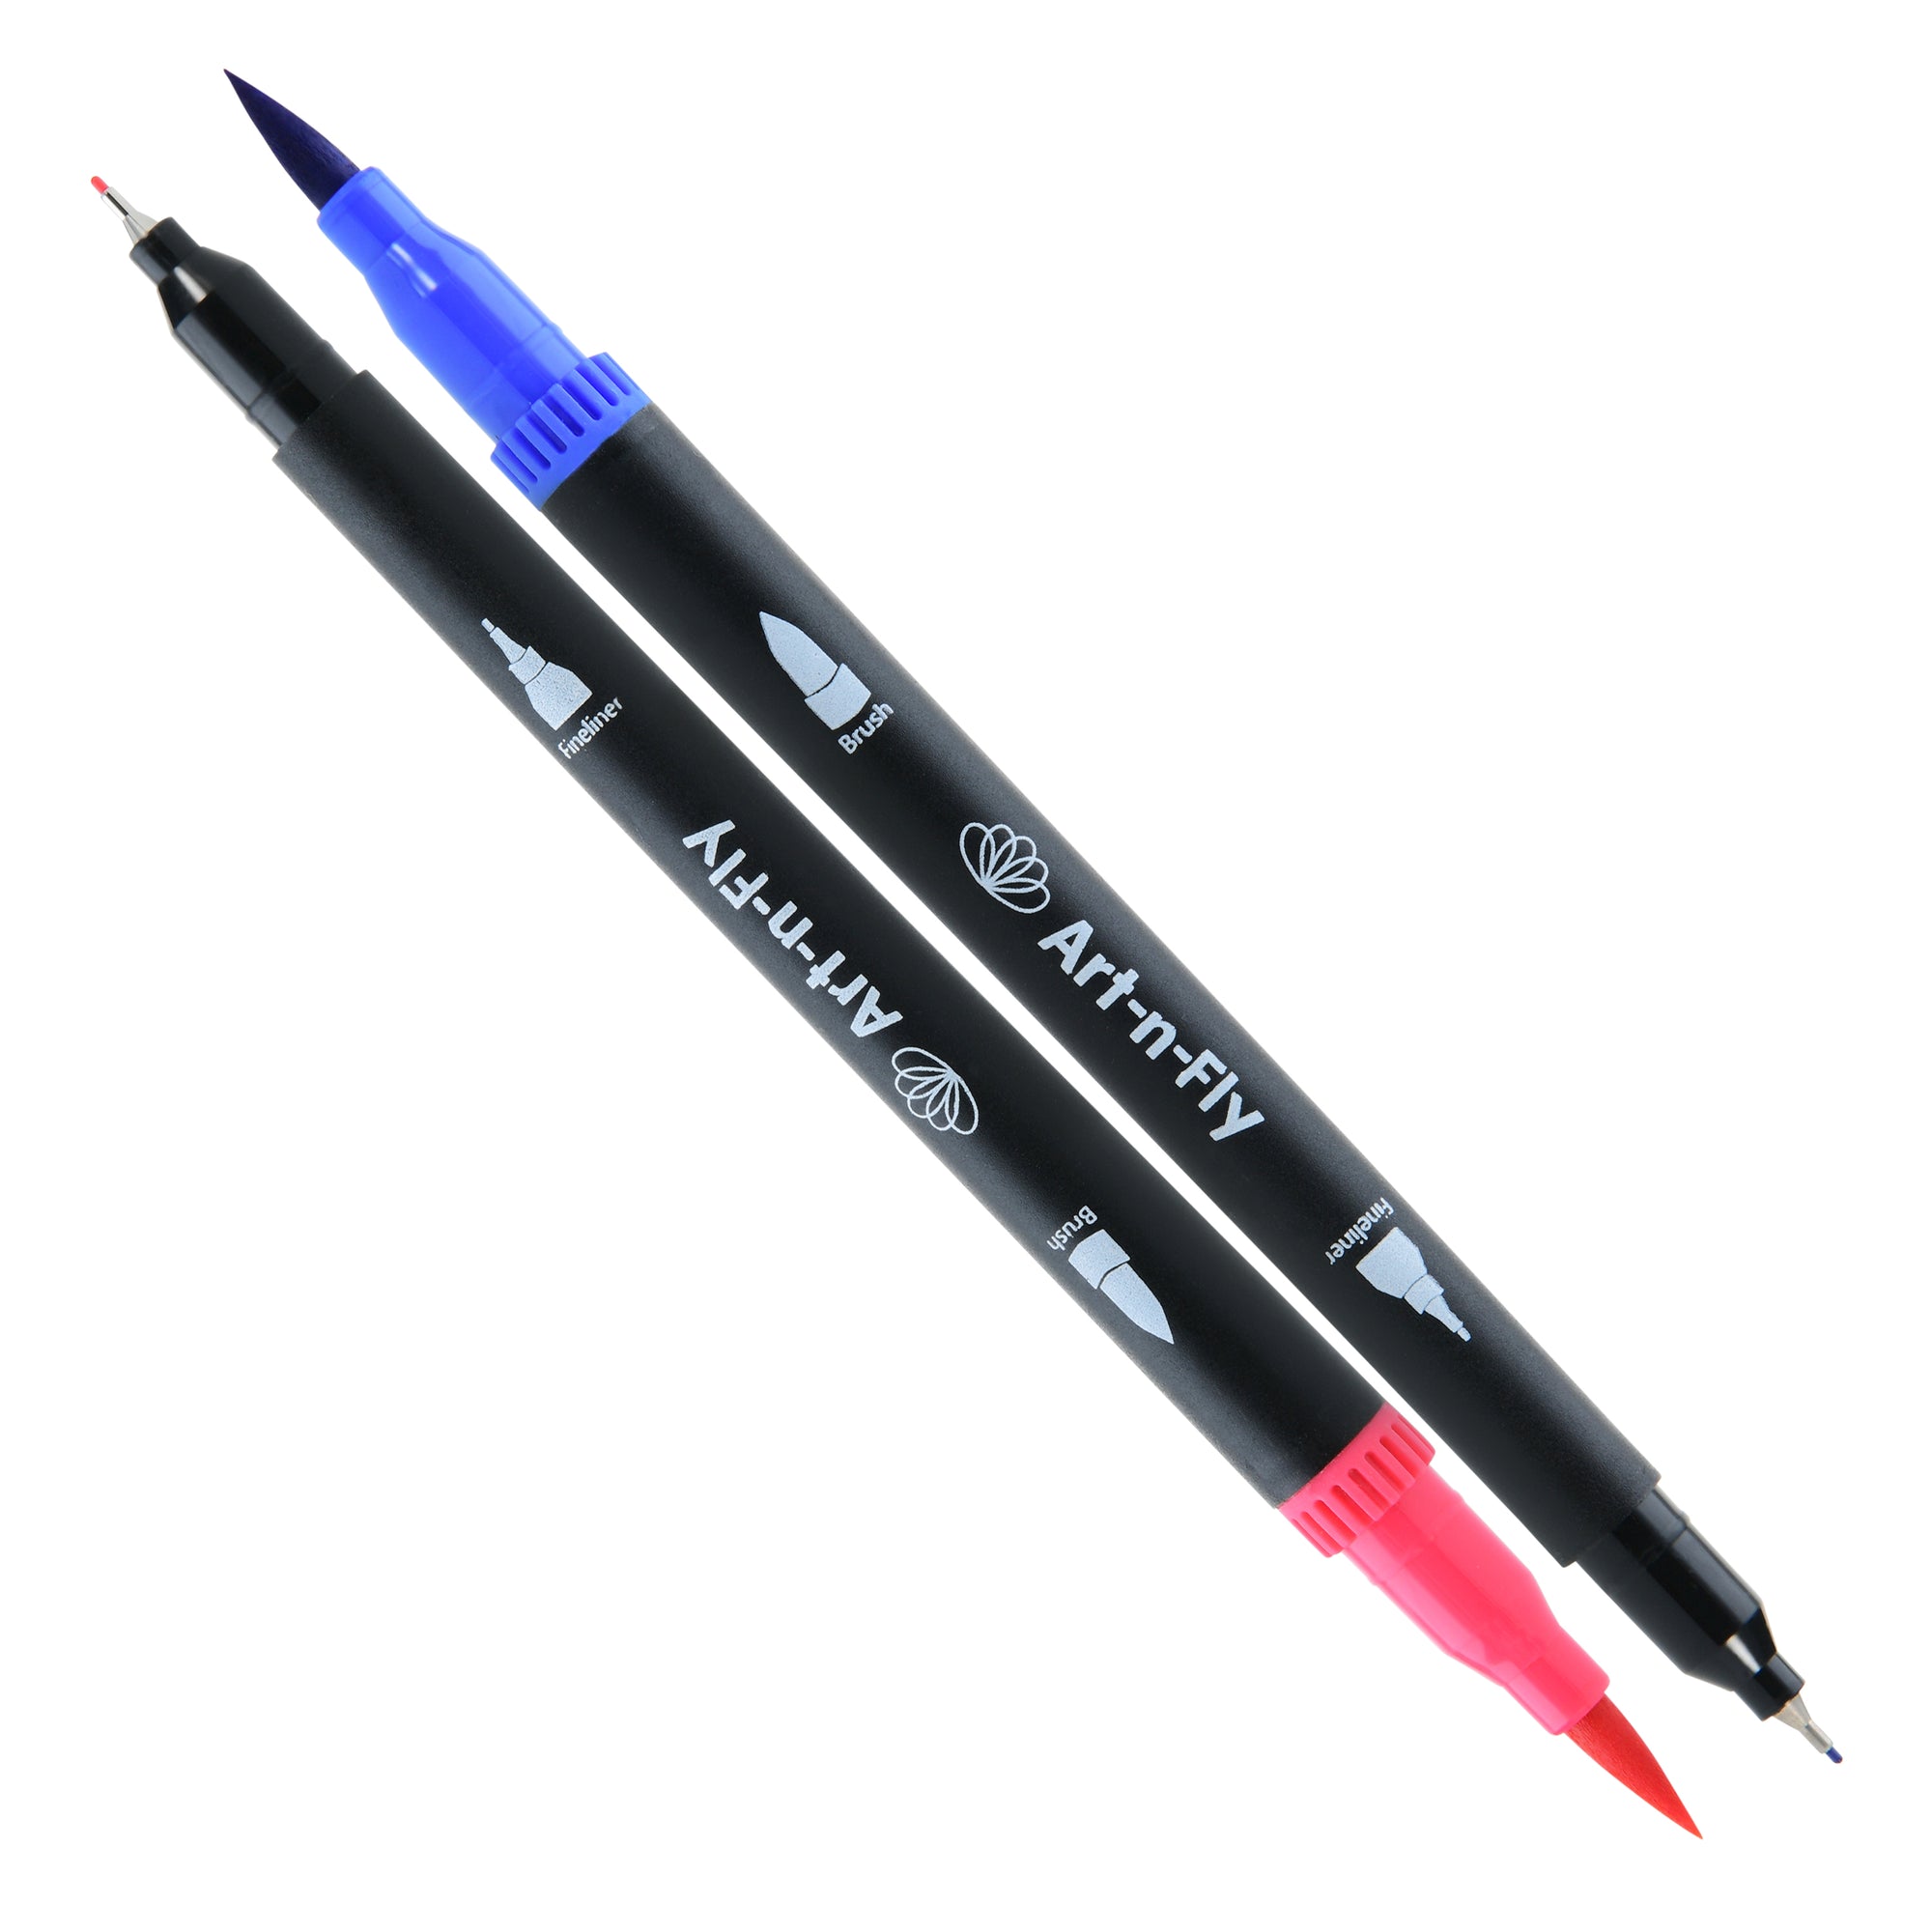 Dual Tip Brush Pens Fineliners Art Markers, Color Dual Tip Brush Marker